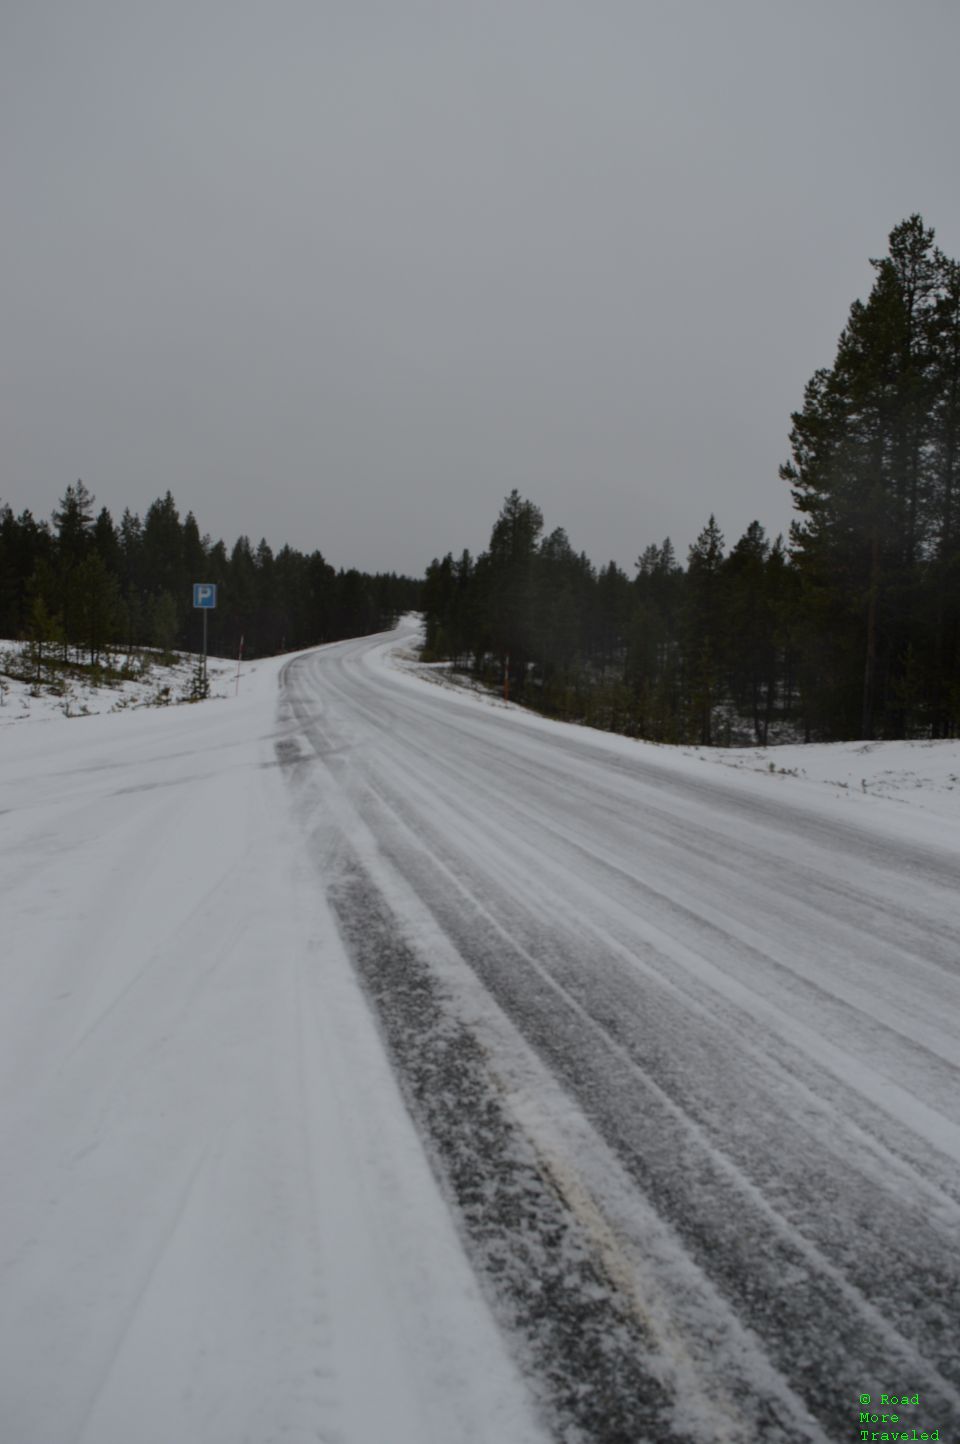 Nordic Road Trip to the Arctic Ocean - Finland Highway 971